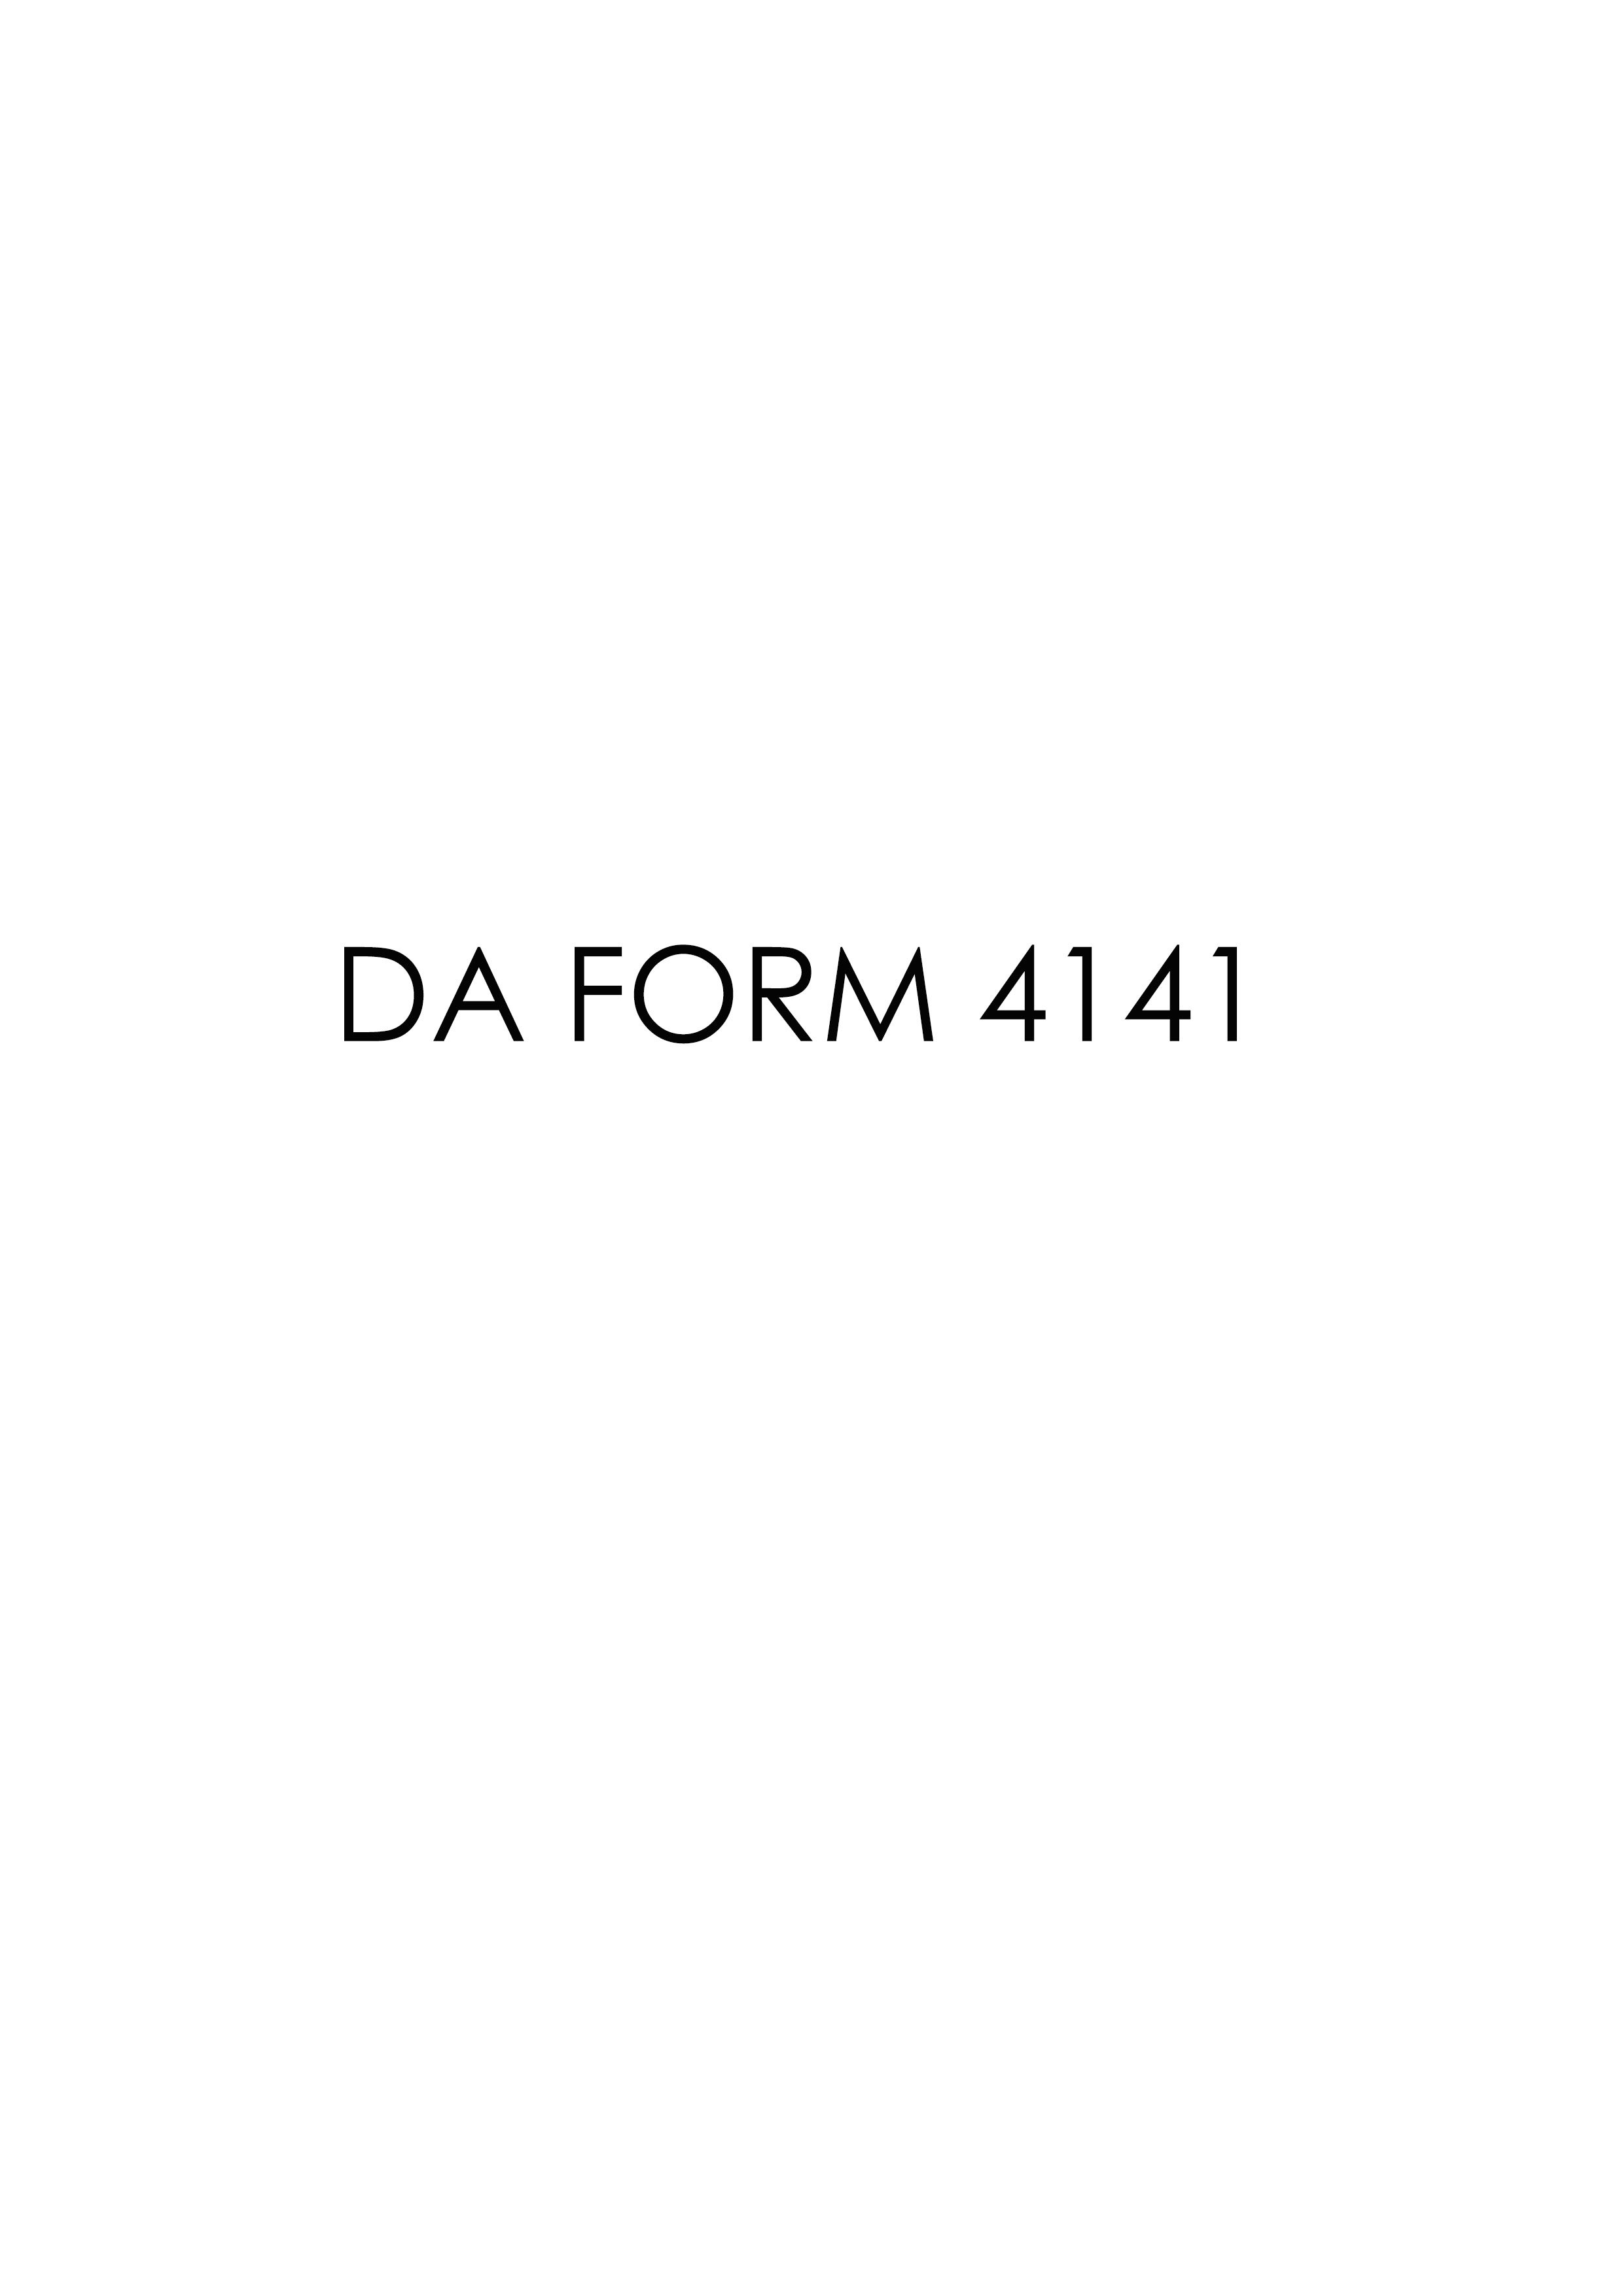 da Form 4141 fillable